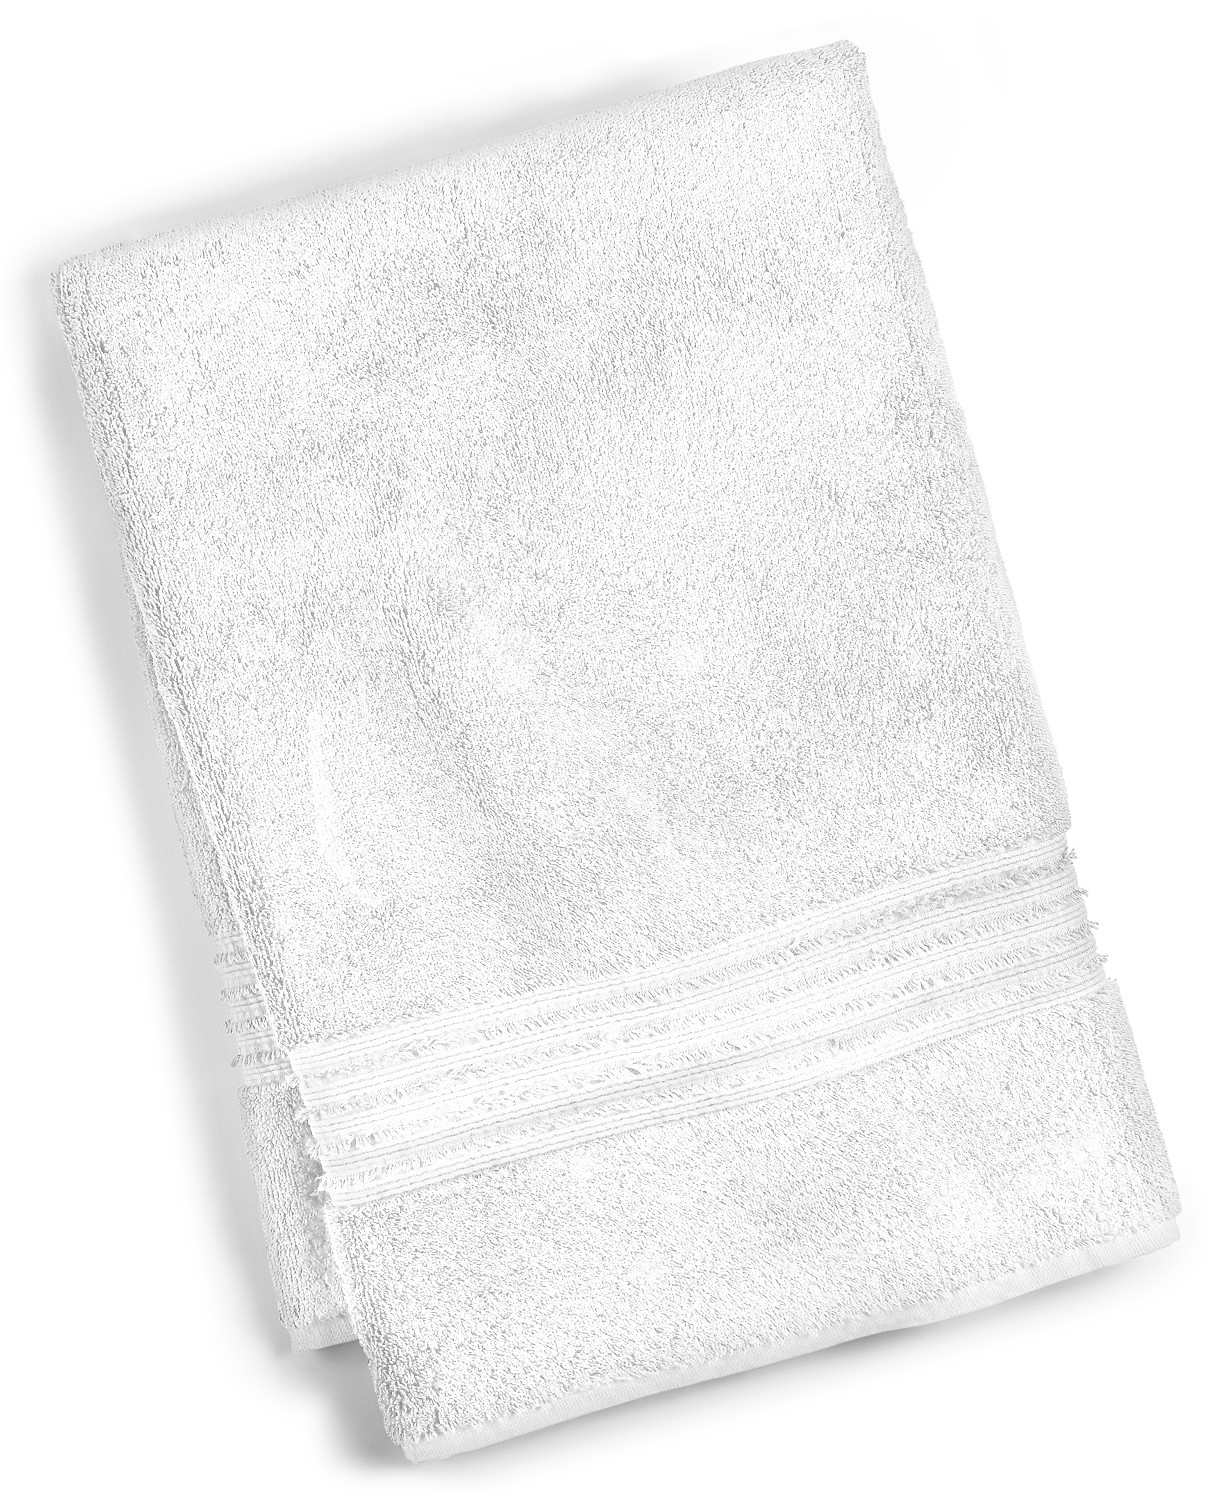 The Best White Fluffy Towels - Natalie Mason